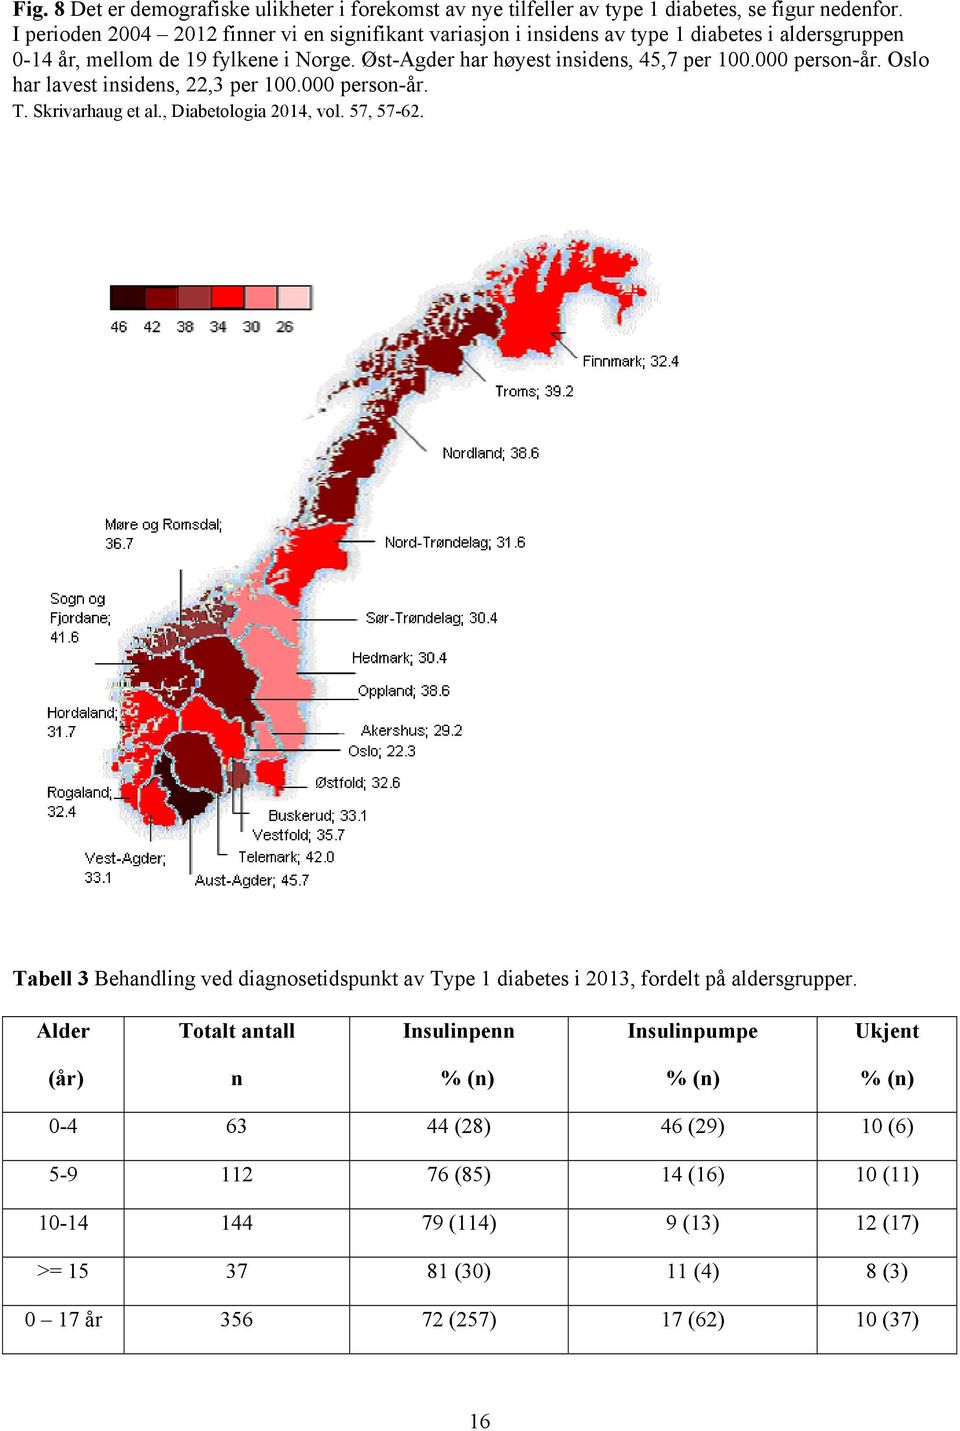 000 person-år. Oslo har lavest insidens, 22,3 per 100.000 person-år. T. Skrivarhaug et al., Diabetologia 2014, vol. 57, 57-62.